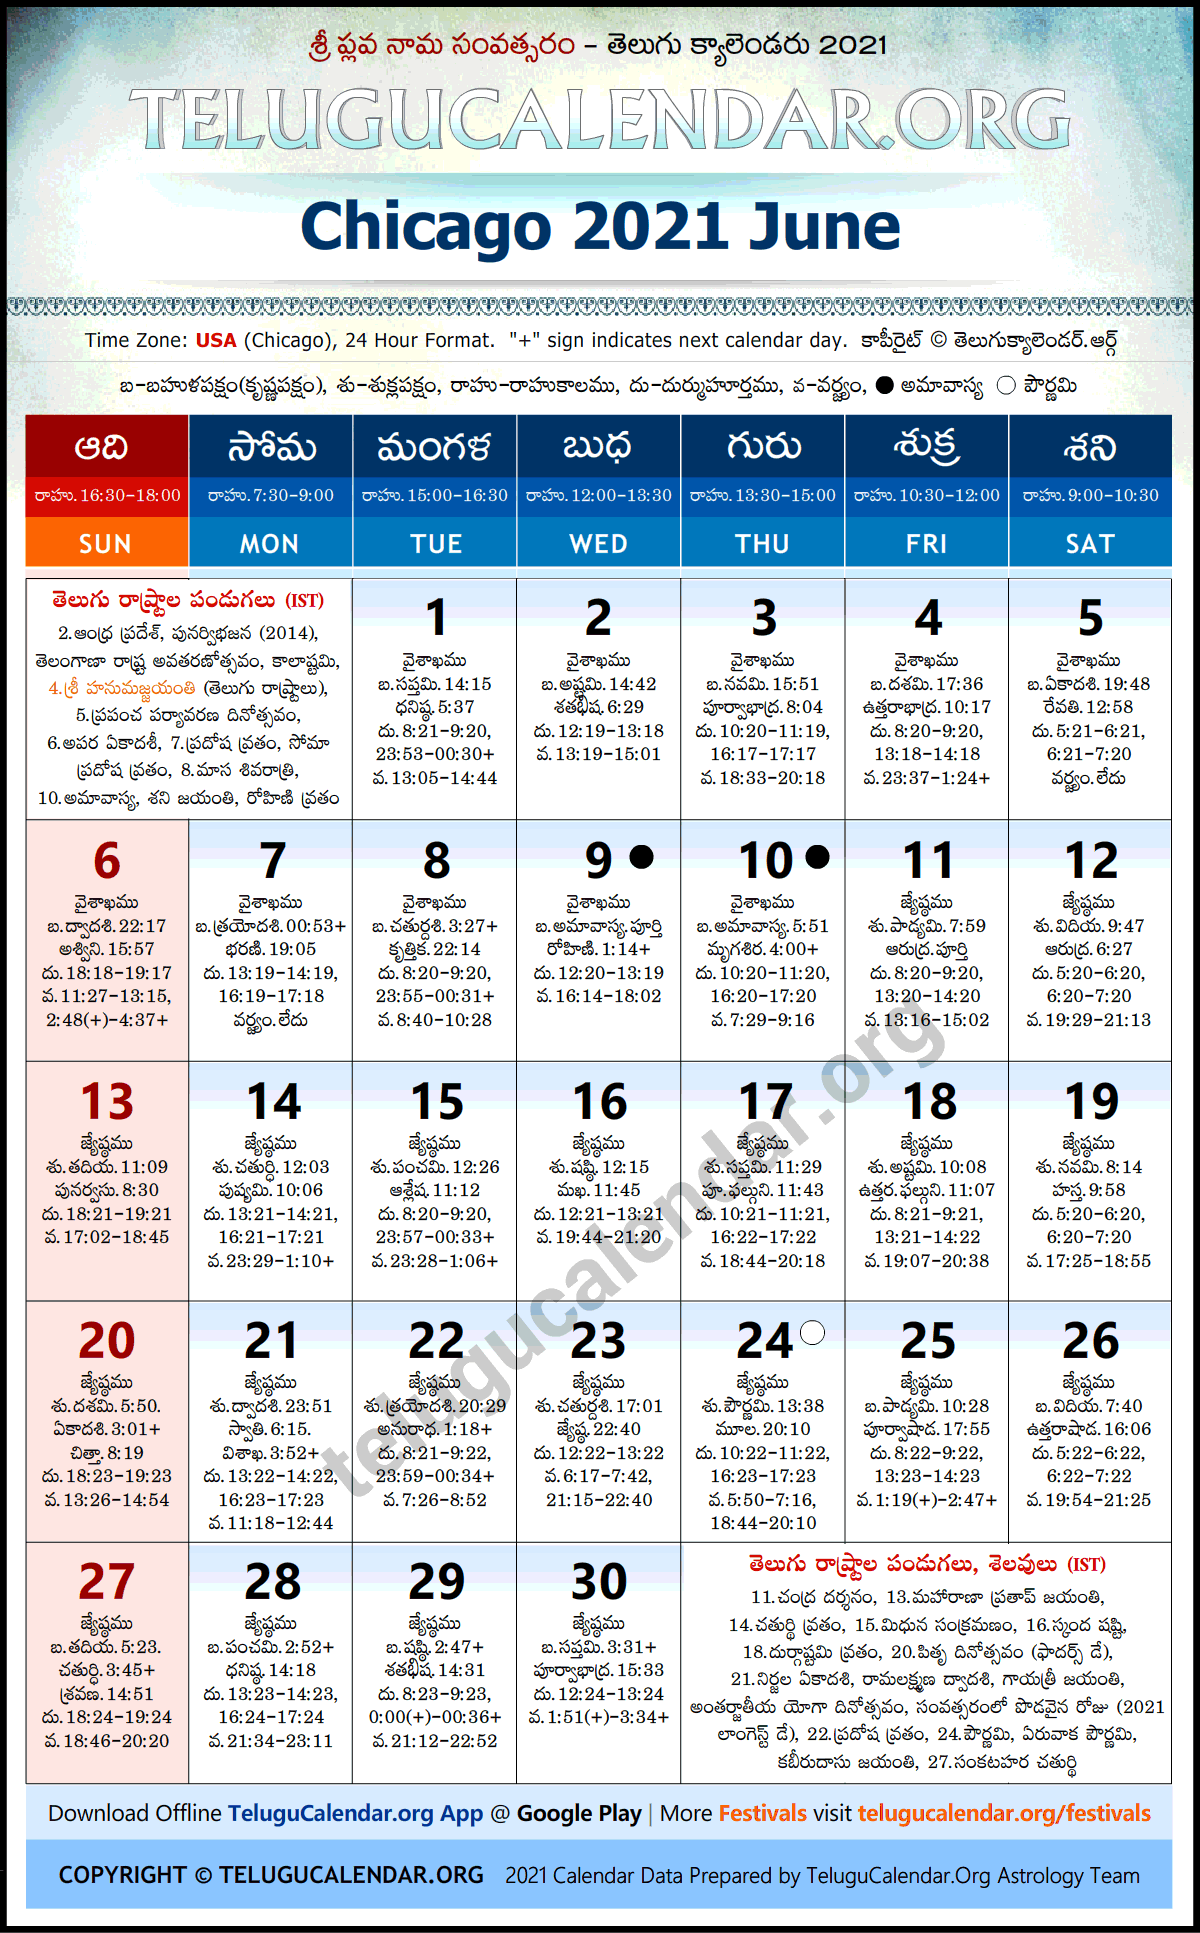 Dallas Telugu Calendar 2022 Chicago Telugu Calendar 2021 June Festivals & Holidays (Ist)